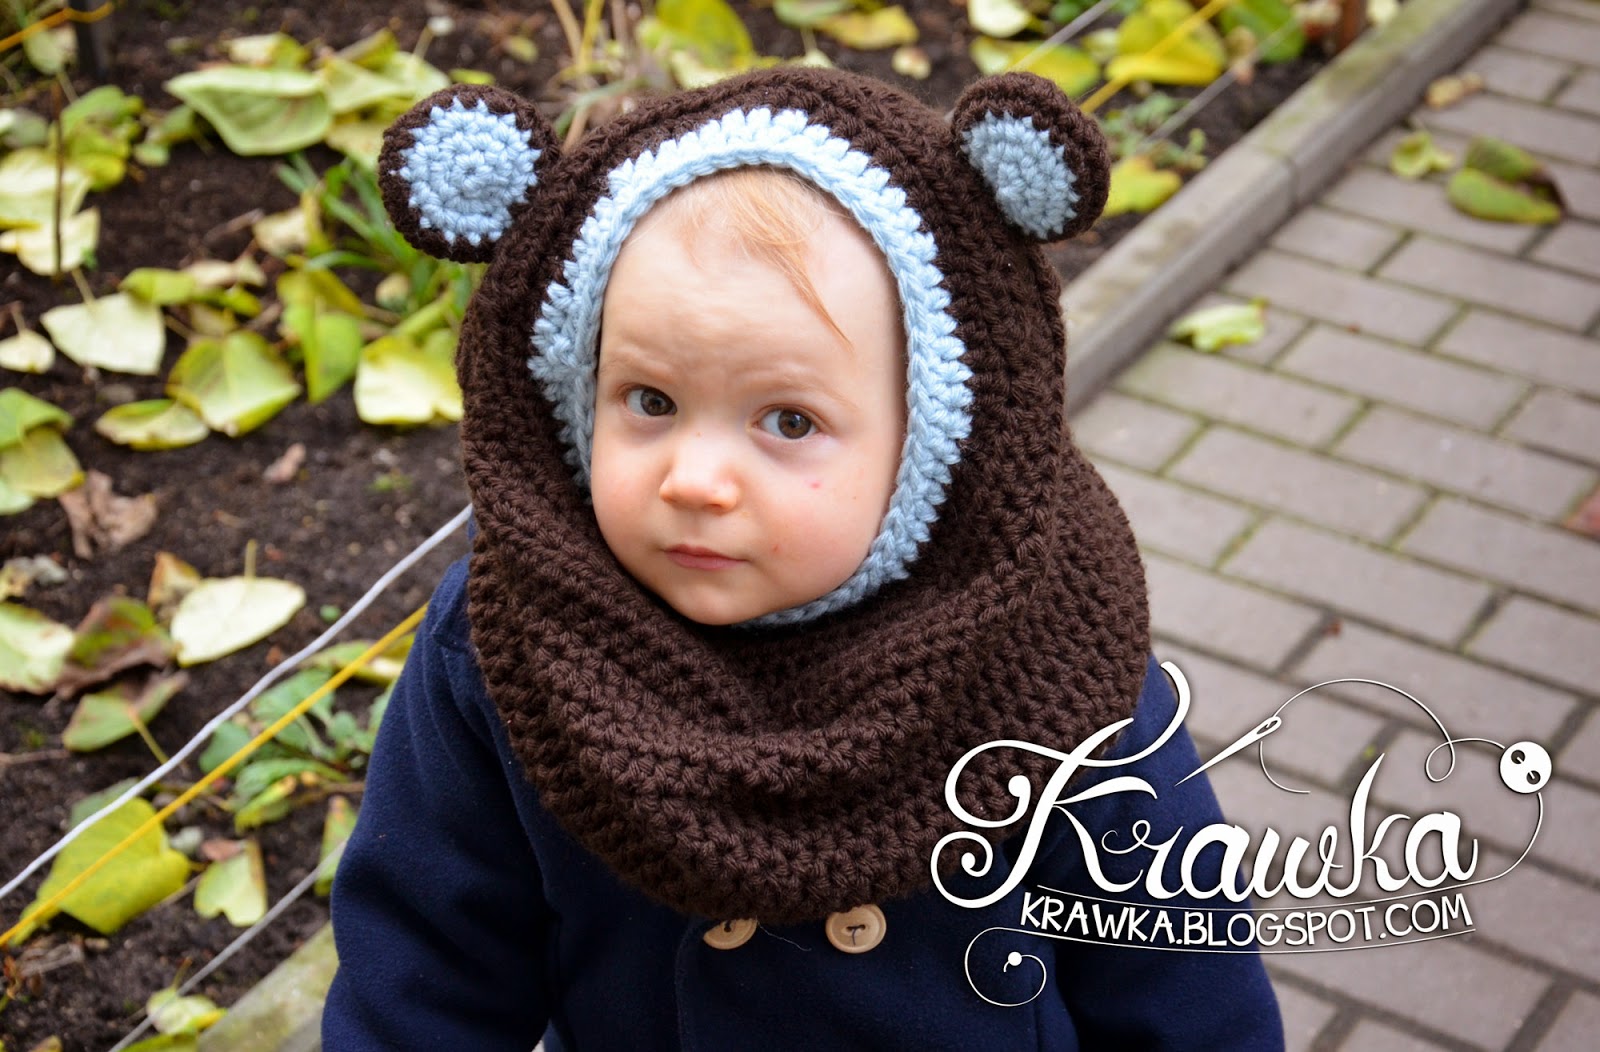 Krawka: Little bear - hooded cowl free crochet pattern. Brown bear with light blue ears, sooo cute and easy to make.